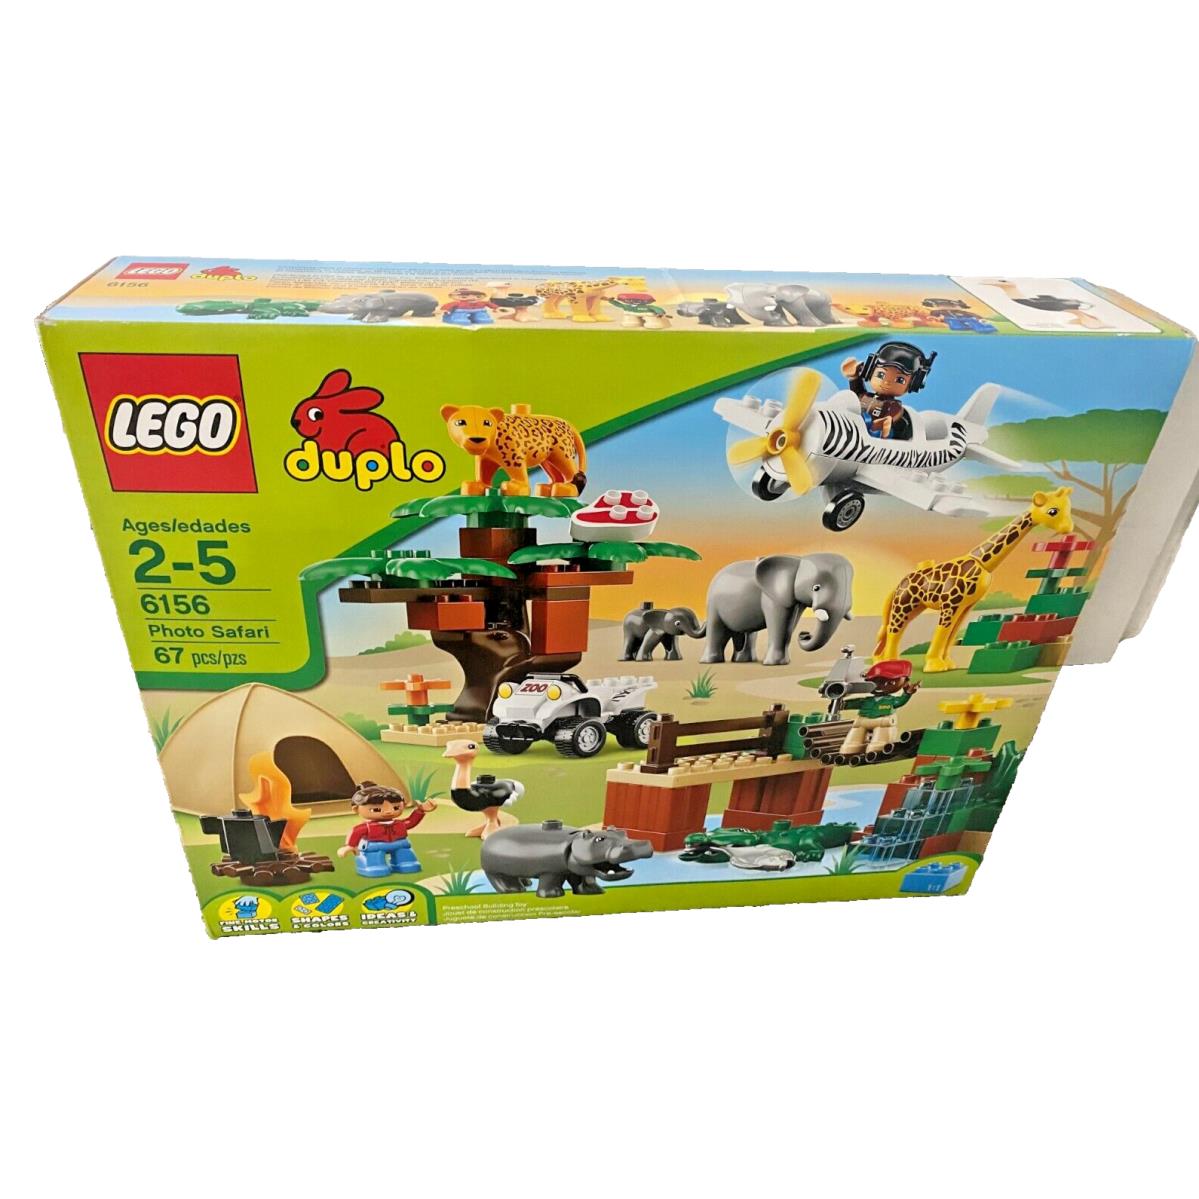 Lego Duplo: Photo Safari 6156 Set